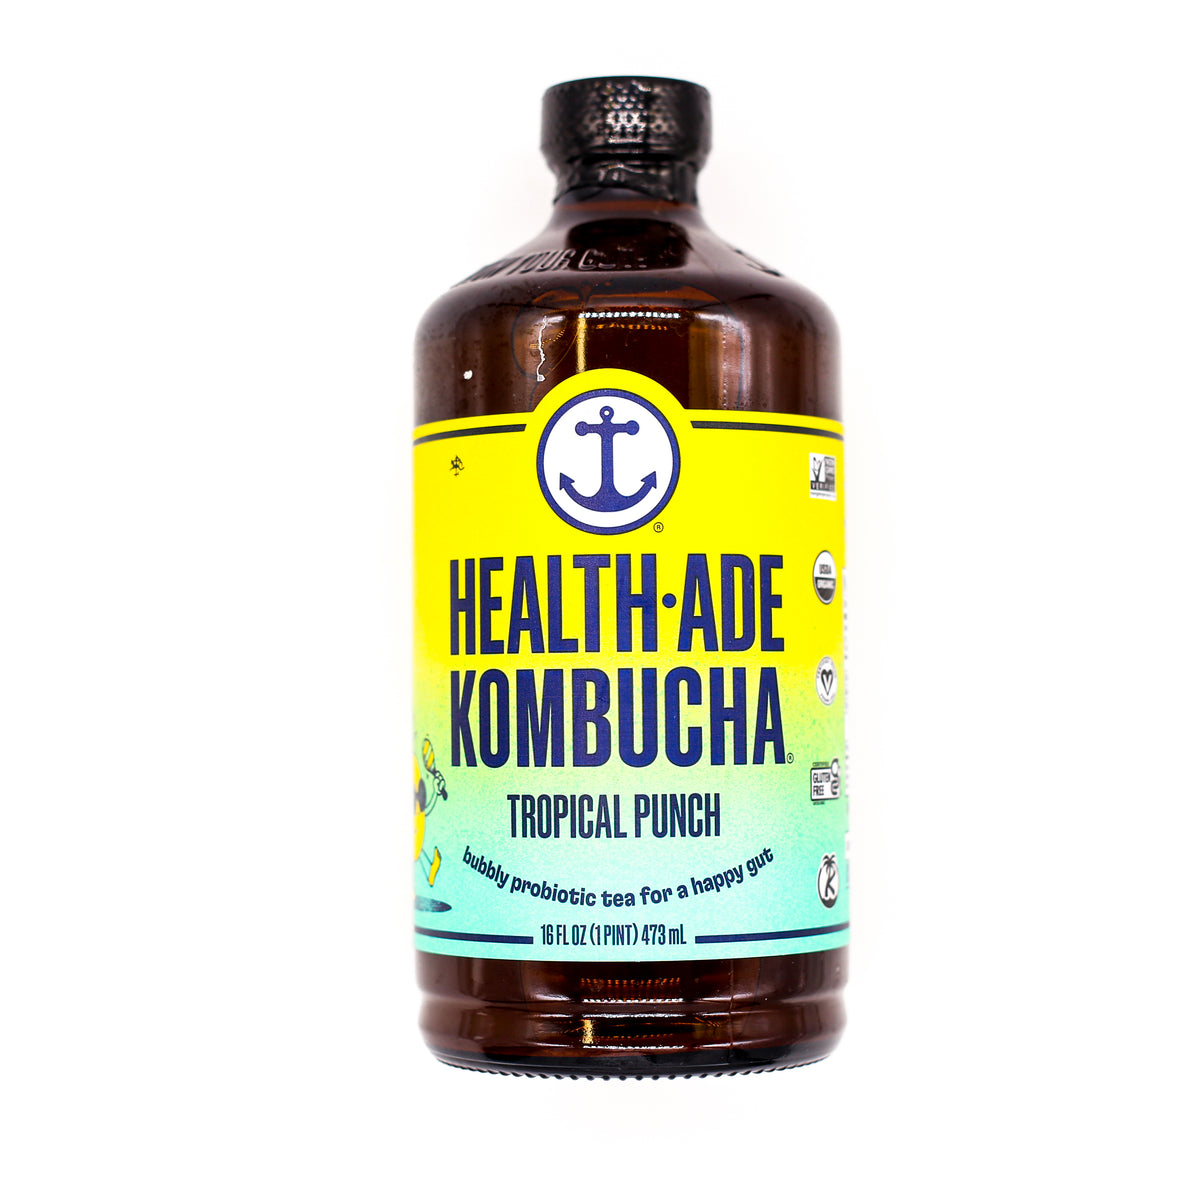 Health Ade Kombucha Tropical Punch